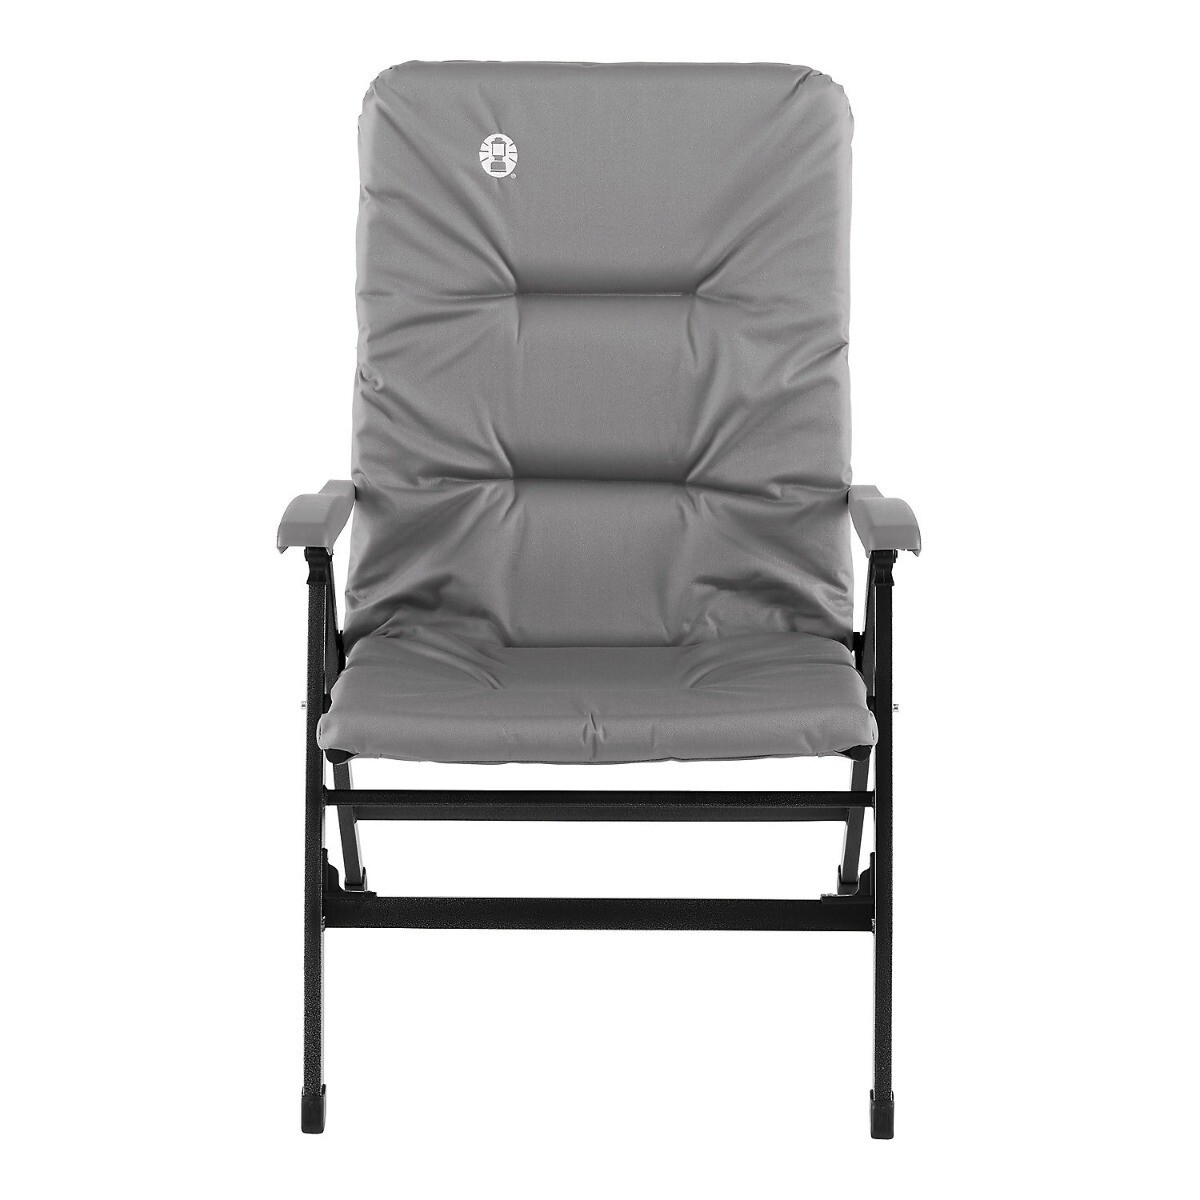 Coleman 8 Position Recliner Chair-Grey